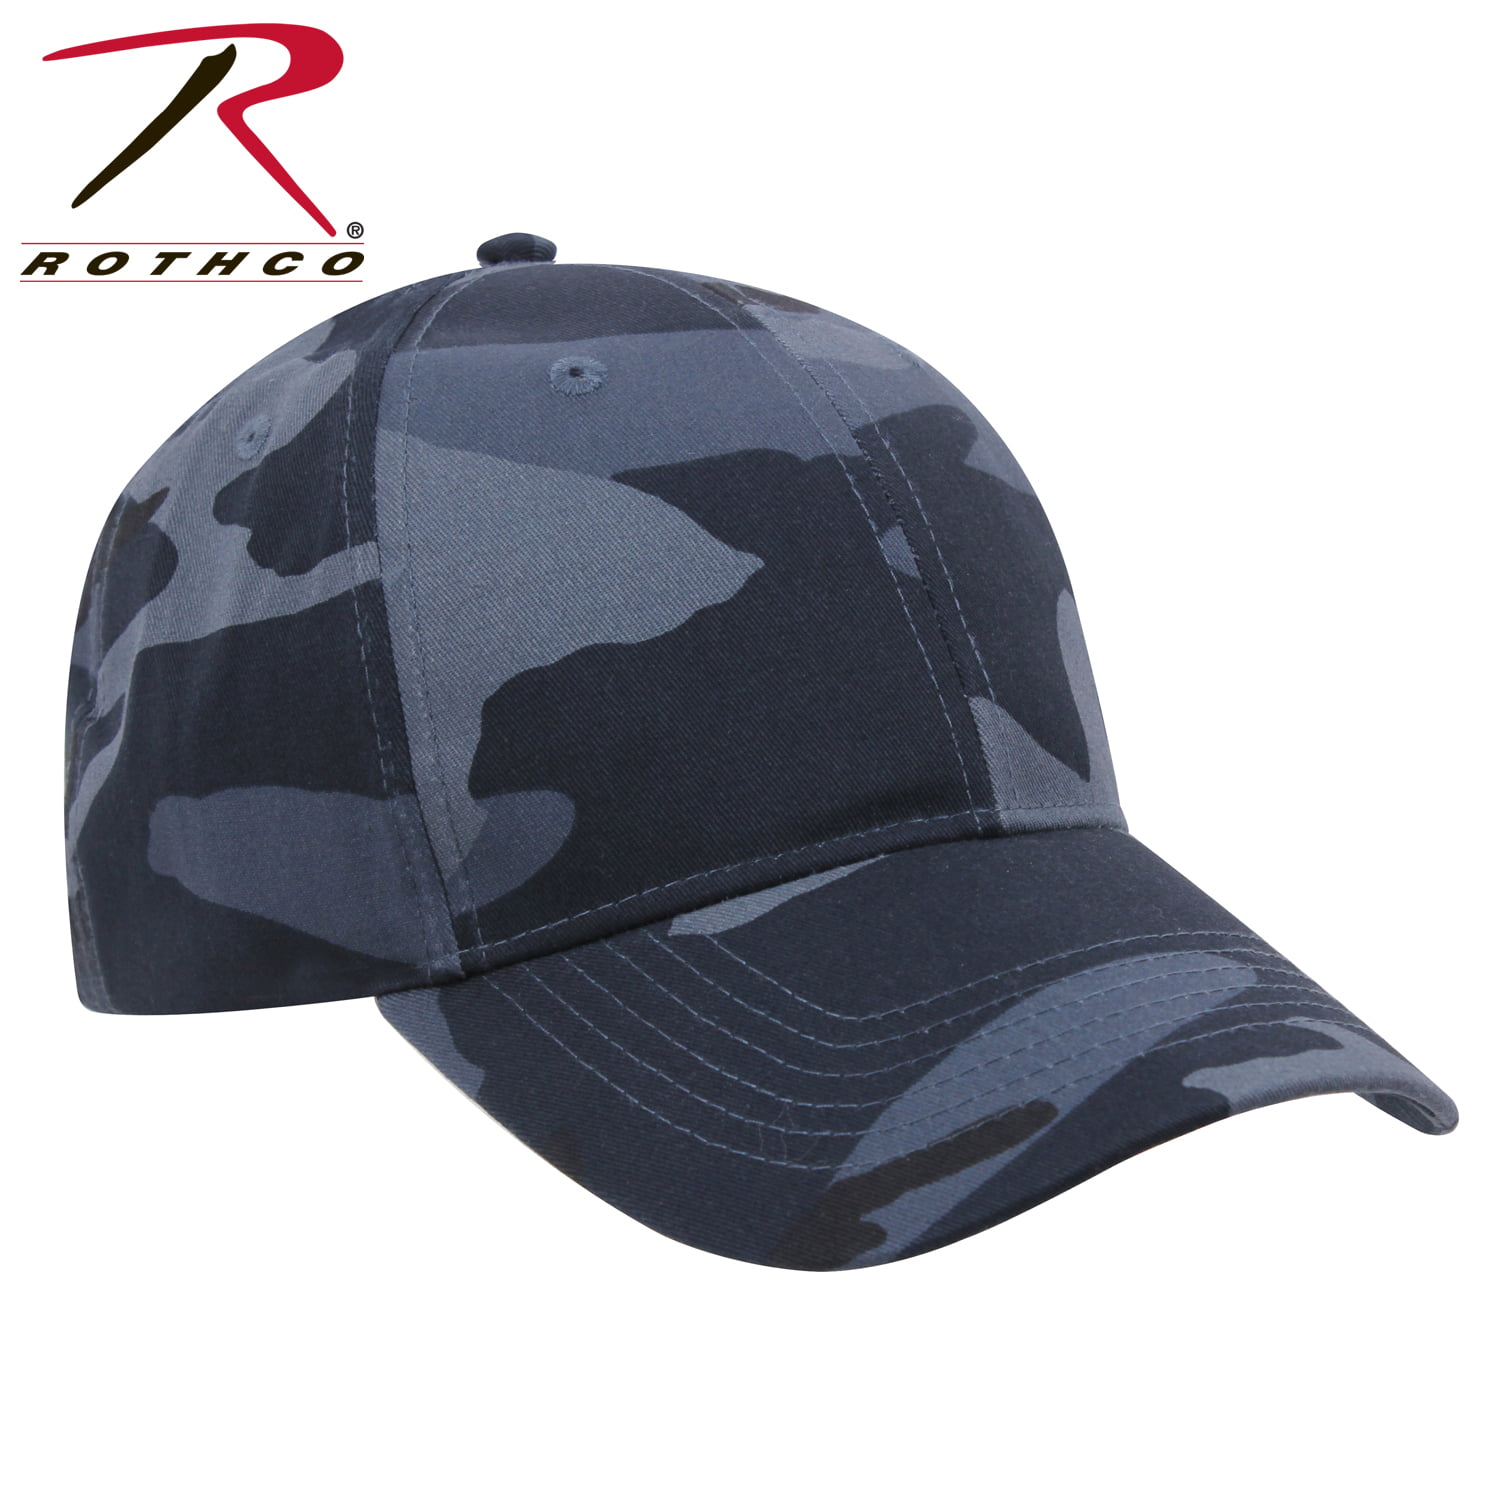 Supreme Low Profile Adjustable Midnight Blue Digital Camouflage Baseball Cap Hat